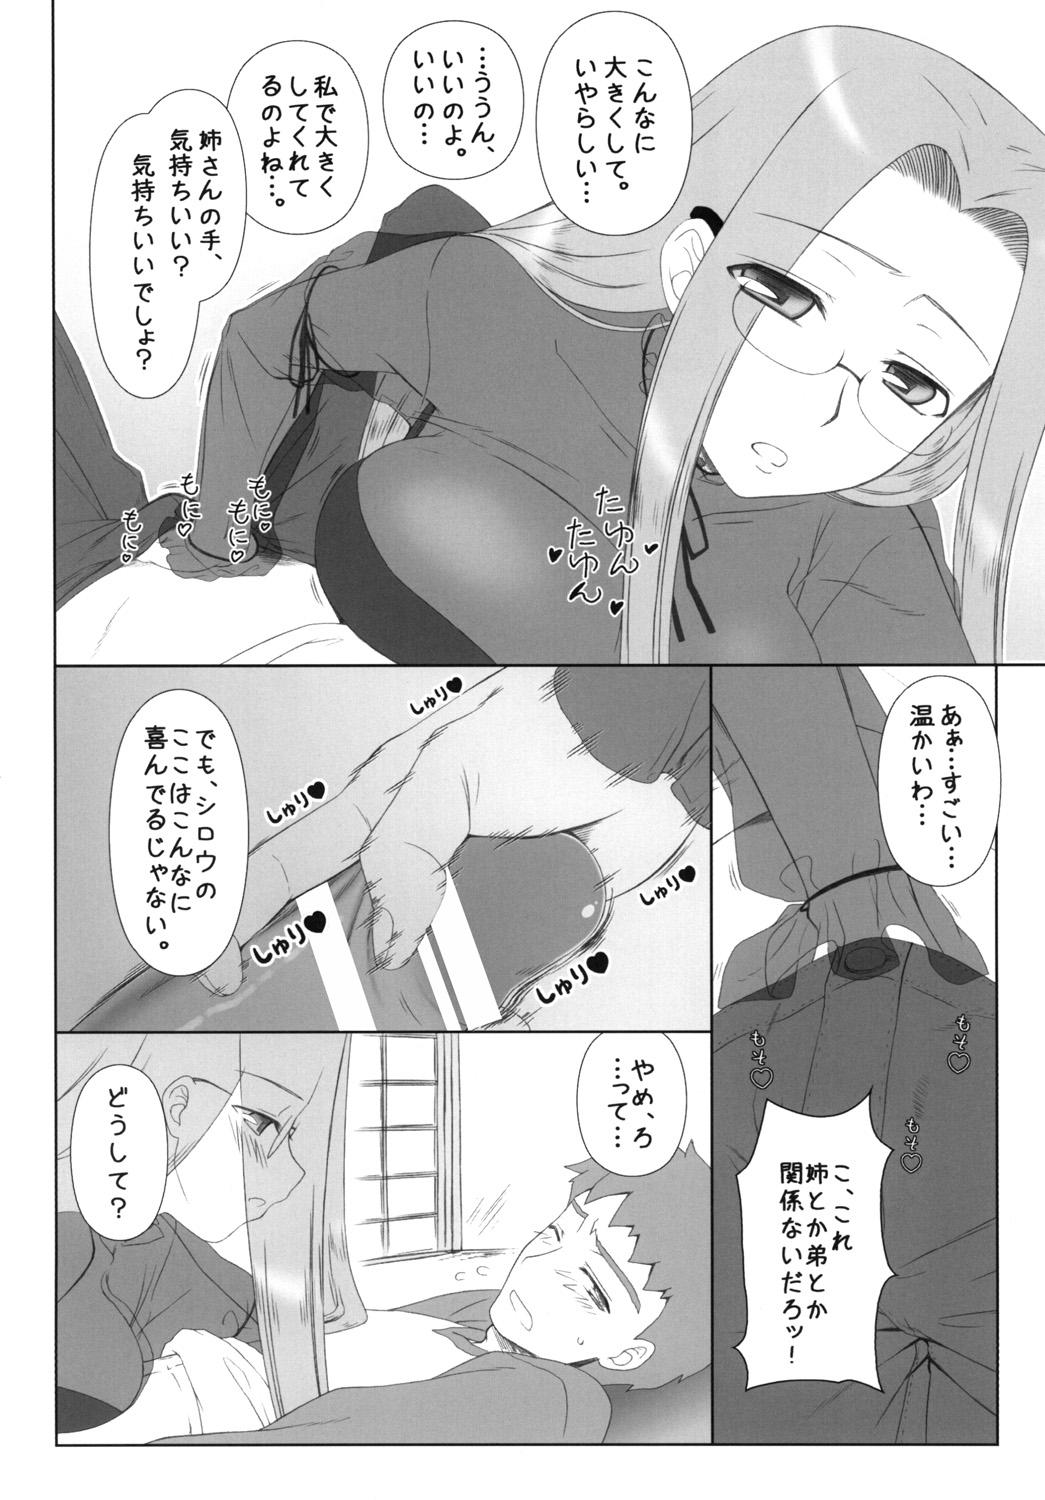 Hunk Yappari Rider wa Eroi na 8 "Rider, Oneechan ni naru" - Fate stay night Hardcore - Page 5